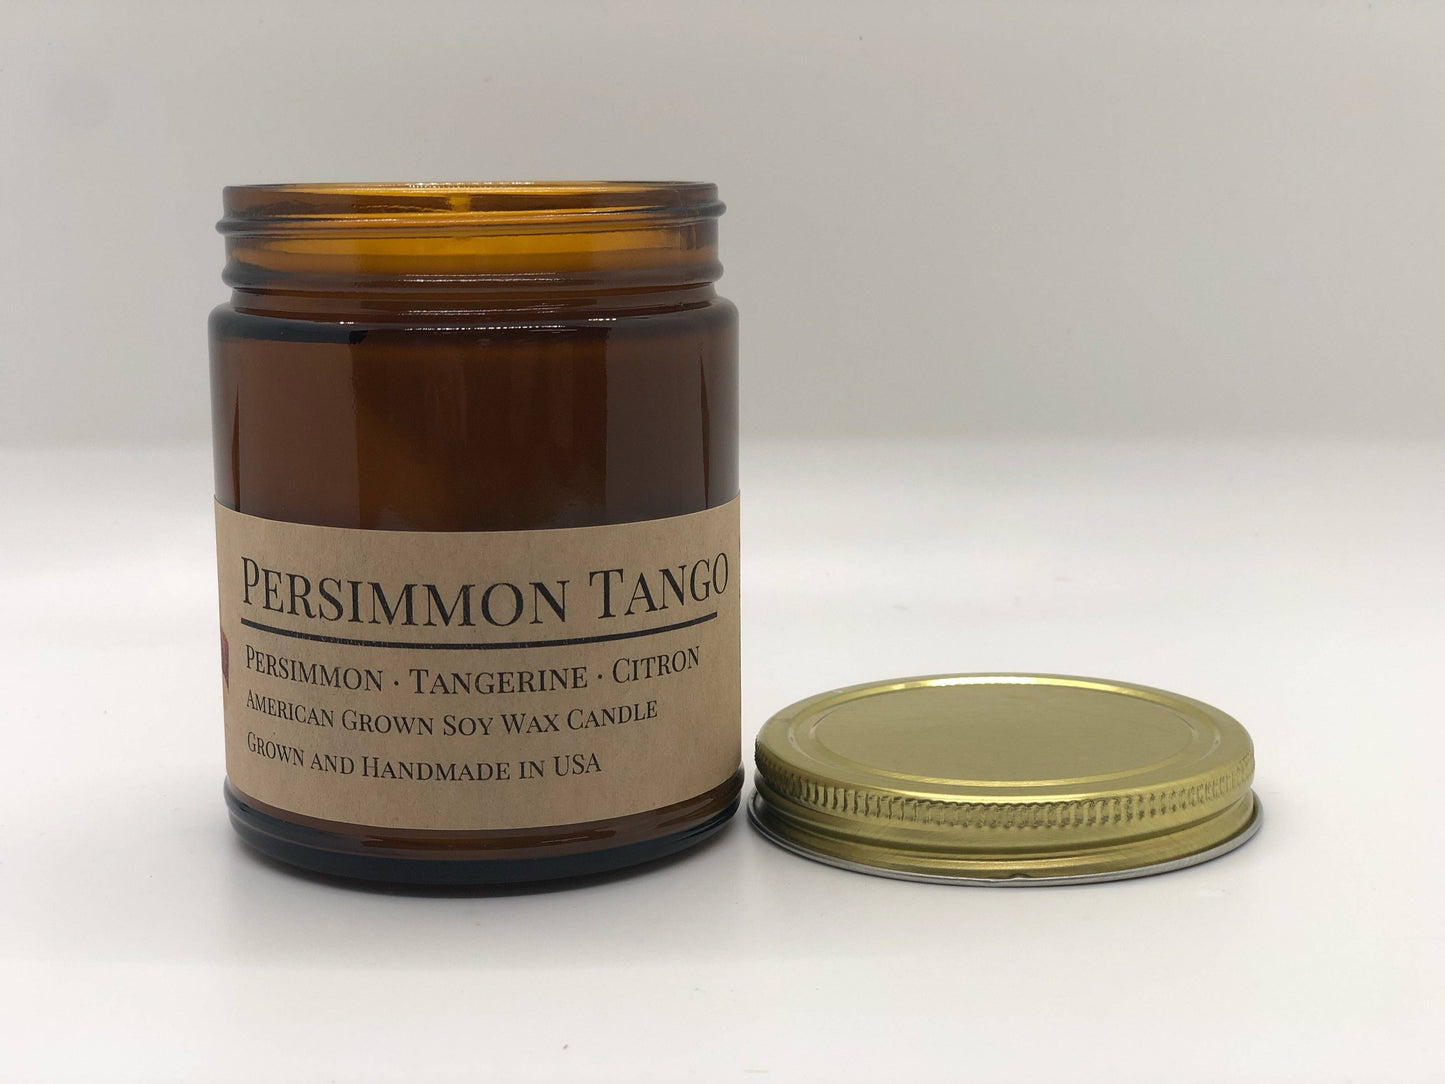 Persimmon Tango